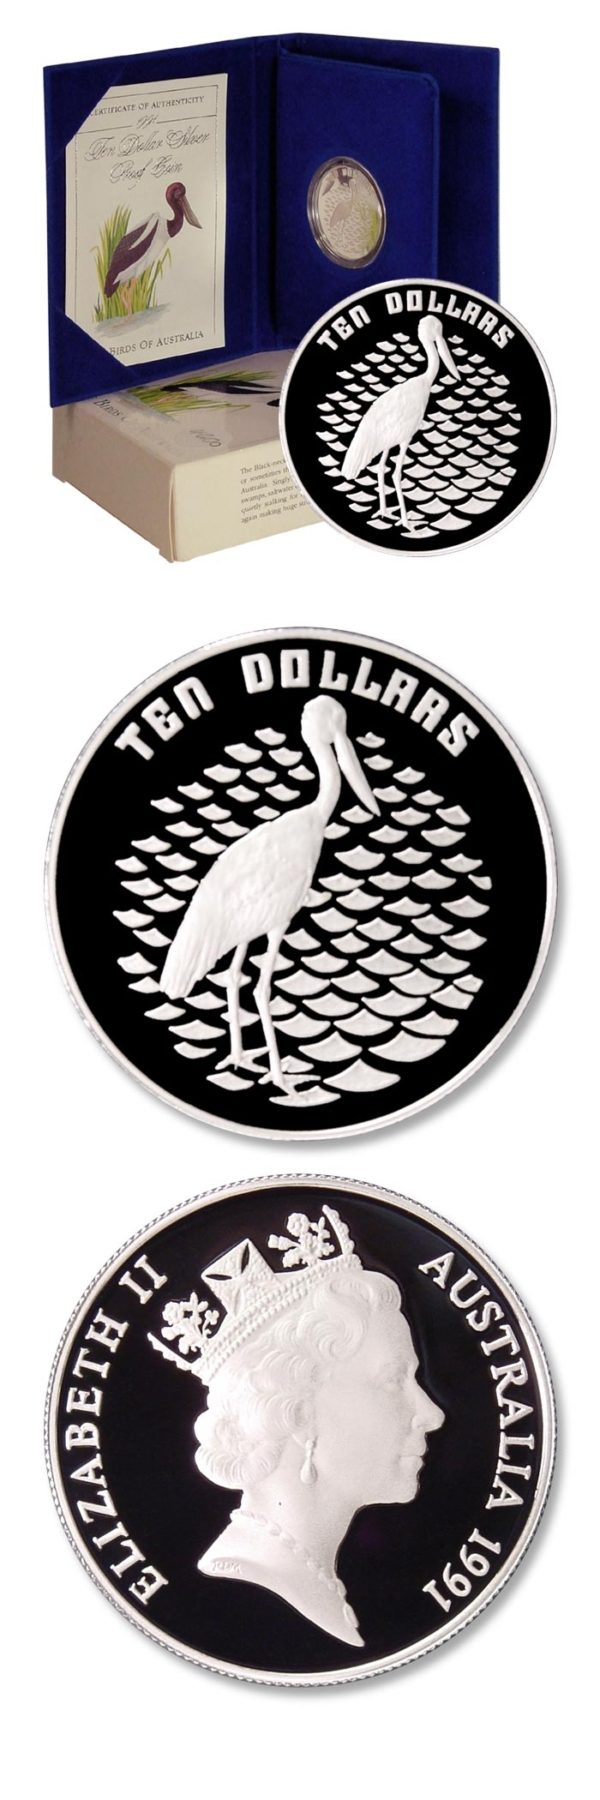 Australia - Black-necked or Jabiru Stork - 10 Dollars - 1991 - Proof Silver Crown - Box